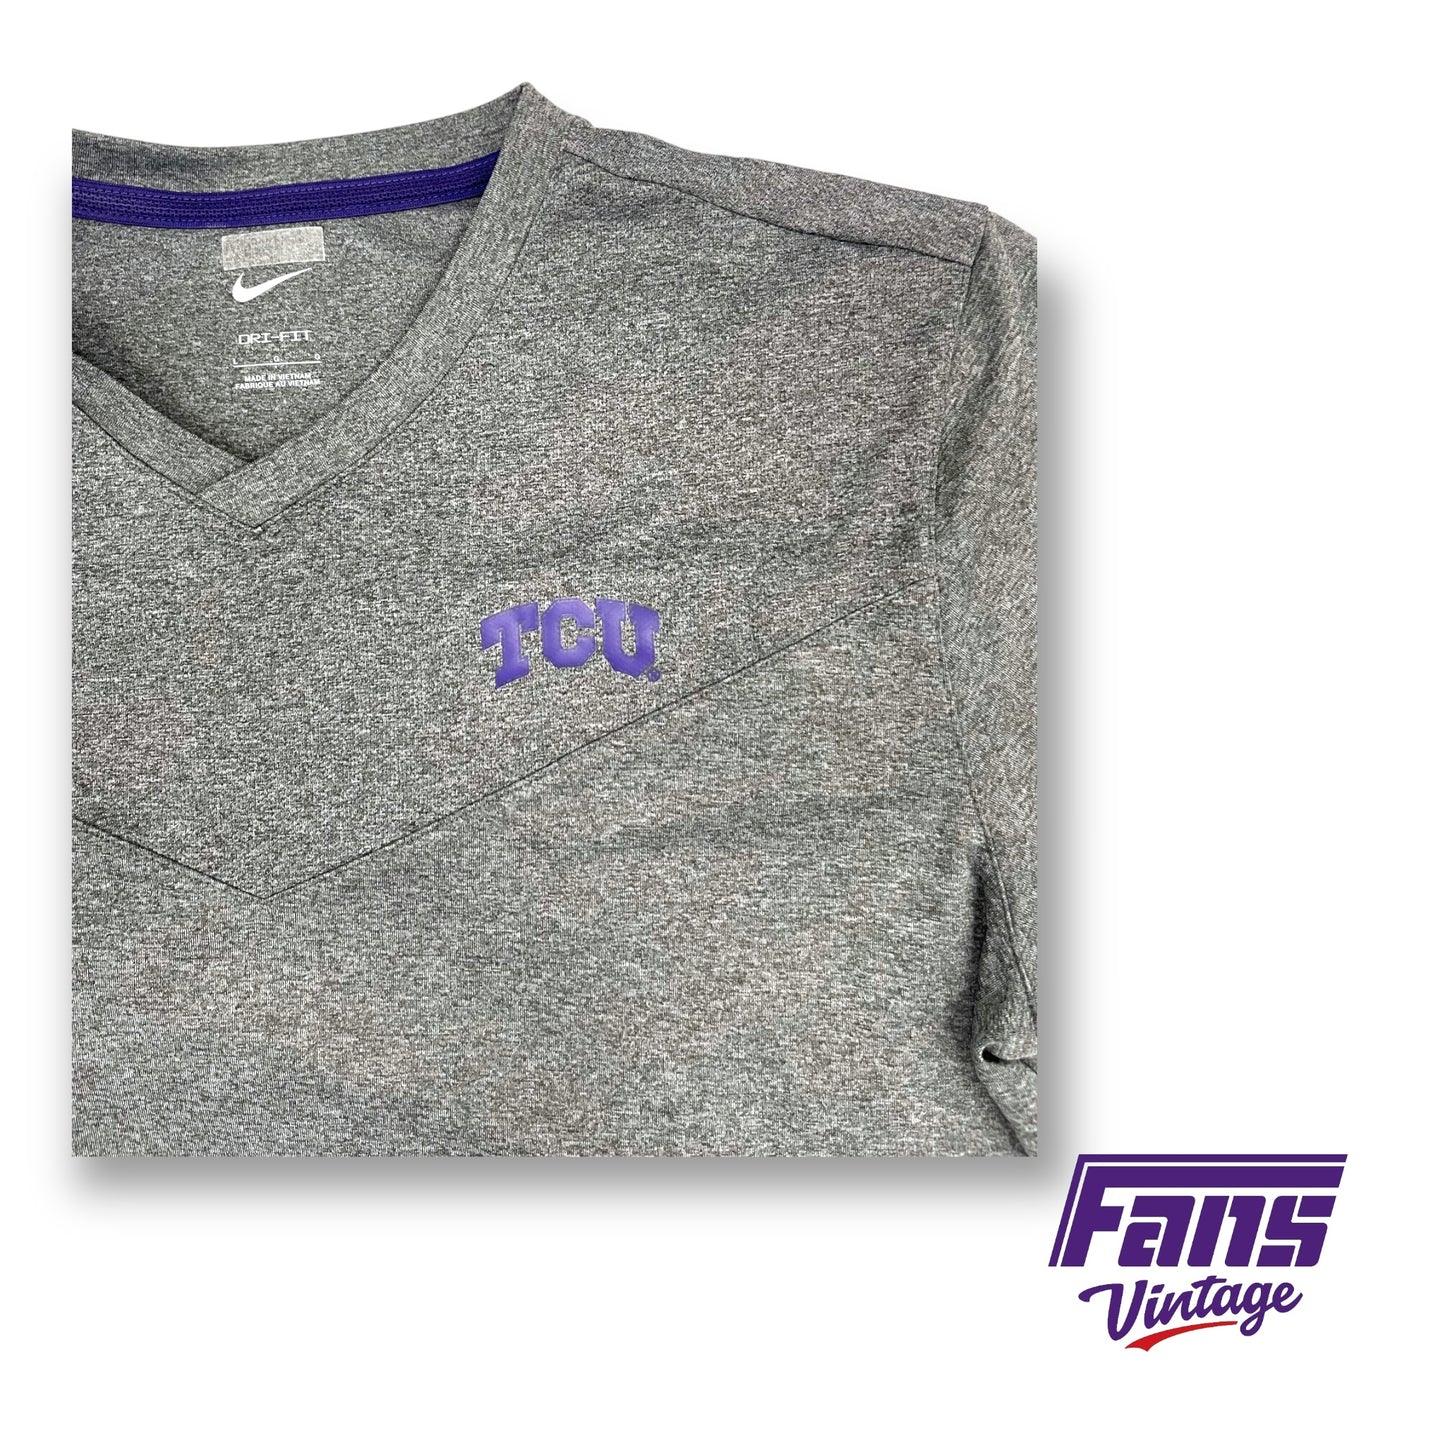 TCU Team Issued Nike Premium long sleeve v-neck workout shirt